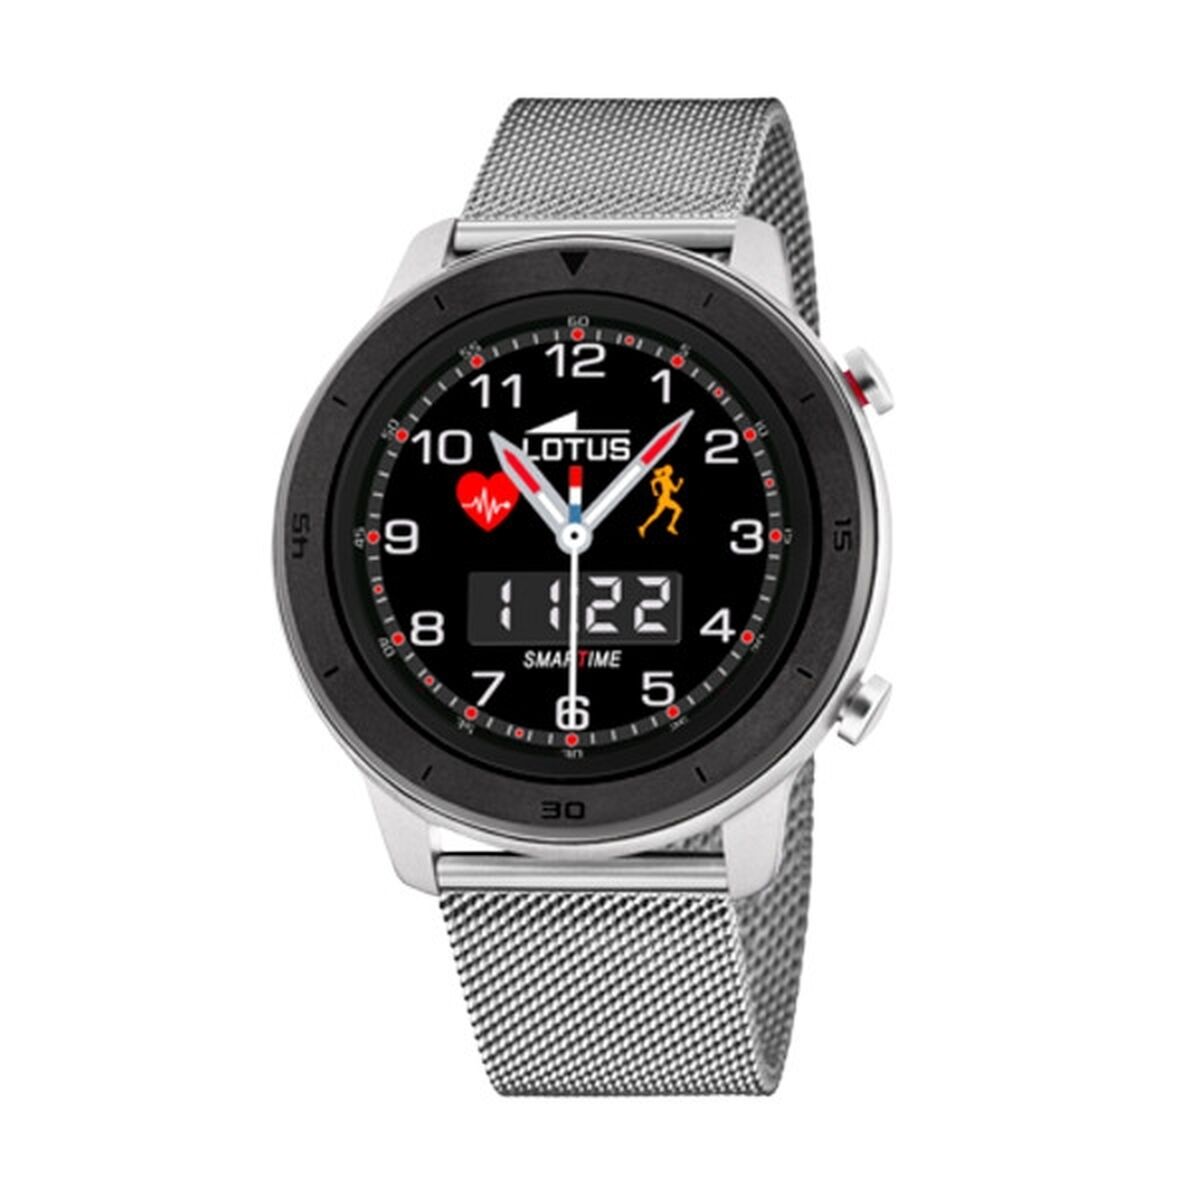 Smartwatch Lotus 50021/1 - CA International  